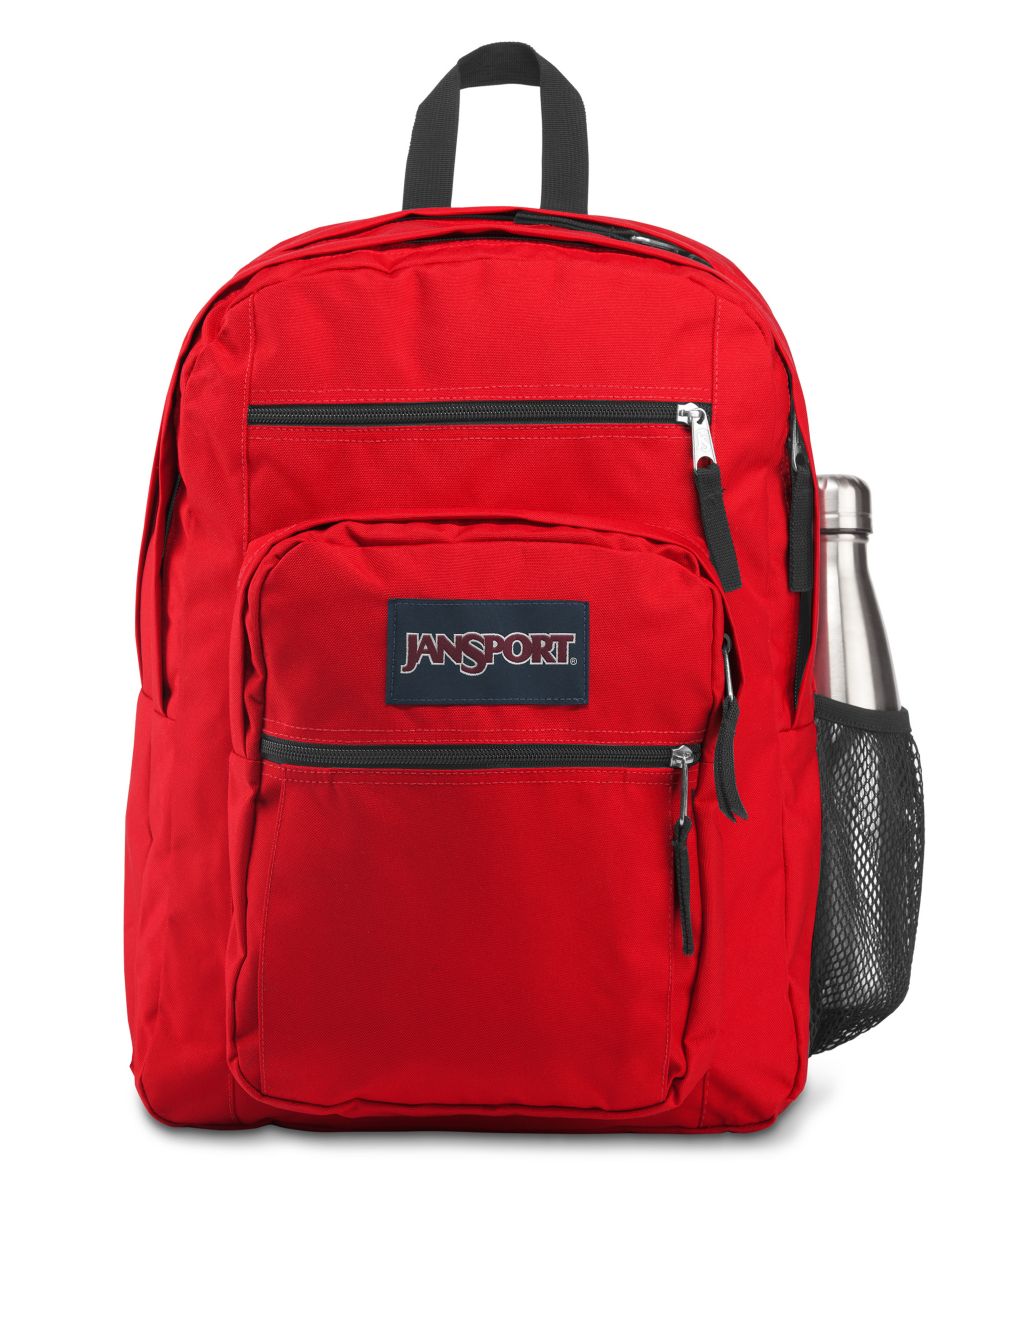 Big Student Backpack image 1